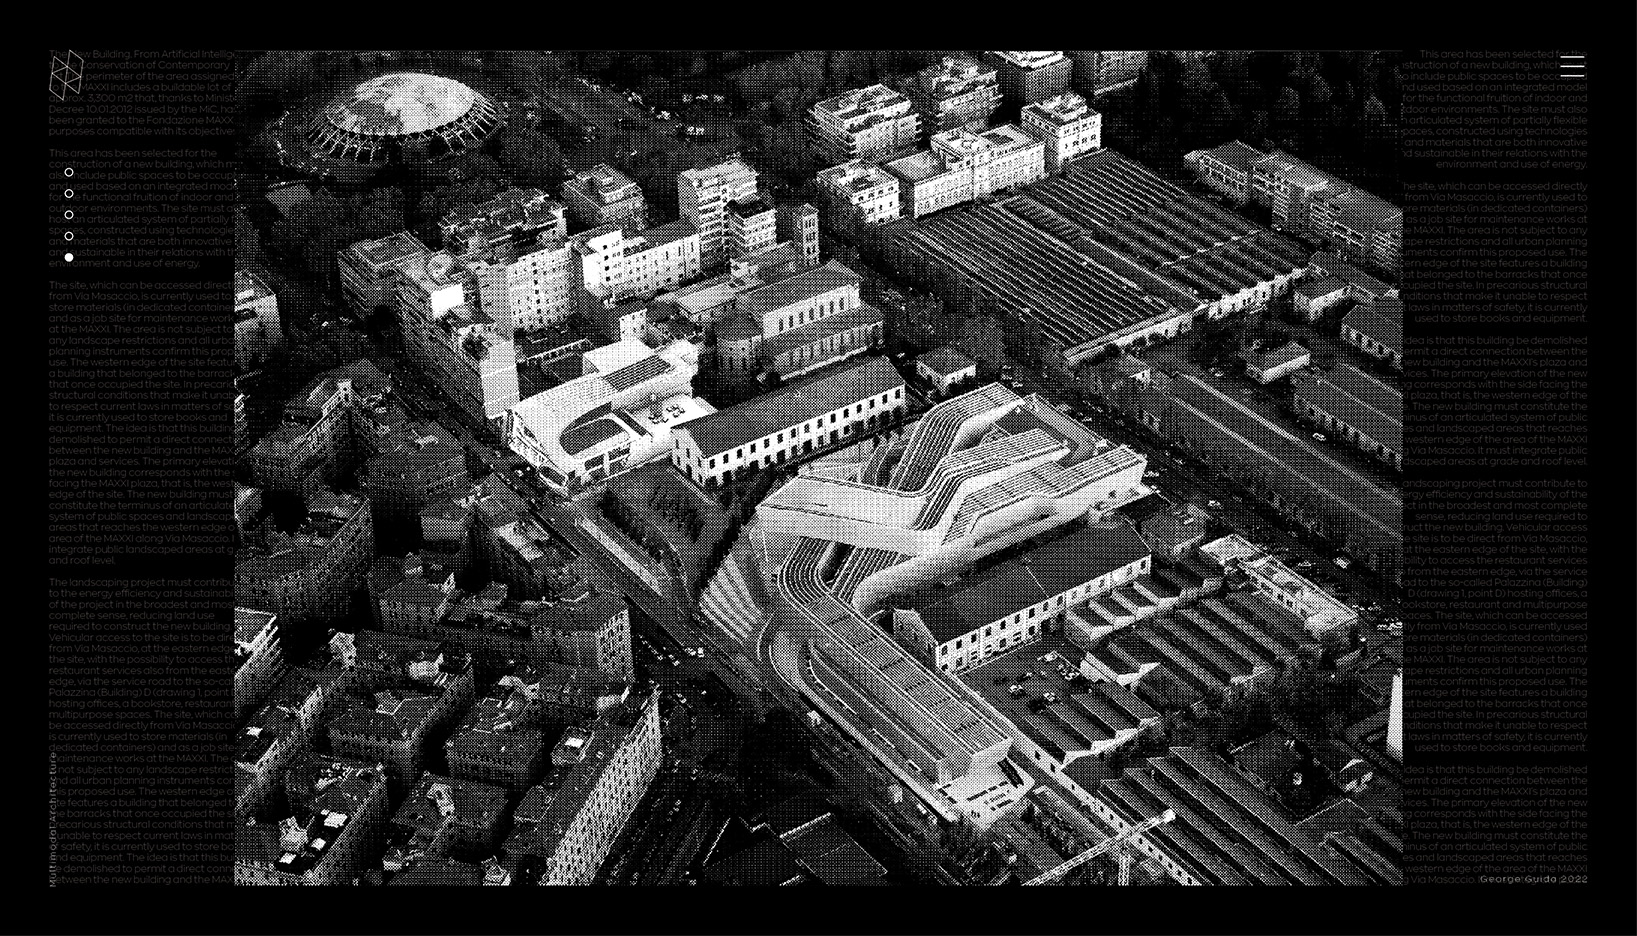 Black and white aerial photo of urban scene.